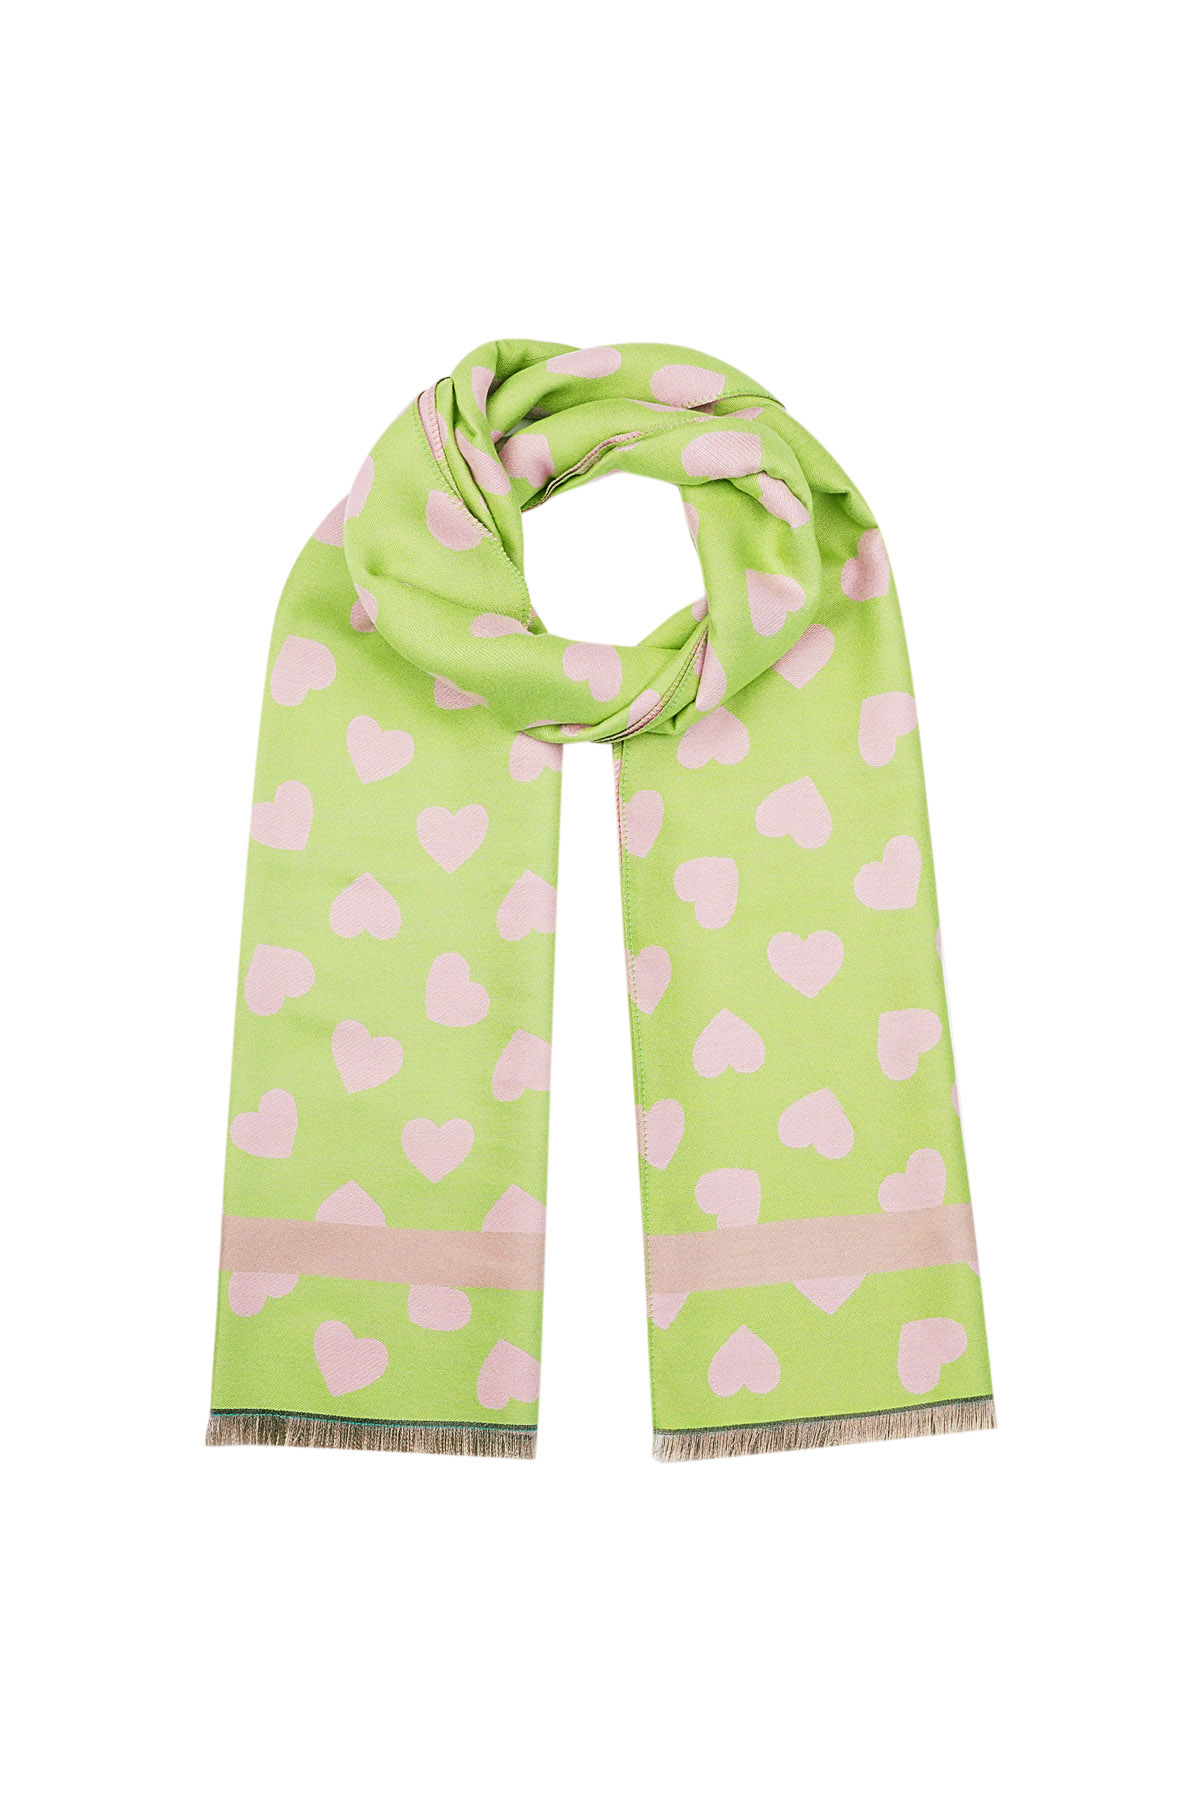 Happy hearts scarf - green